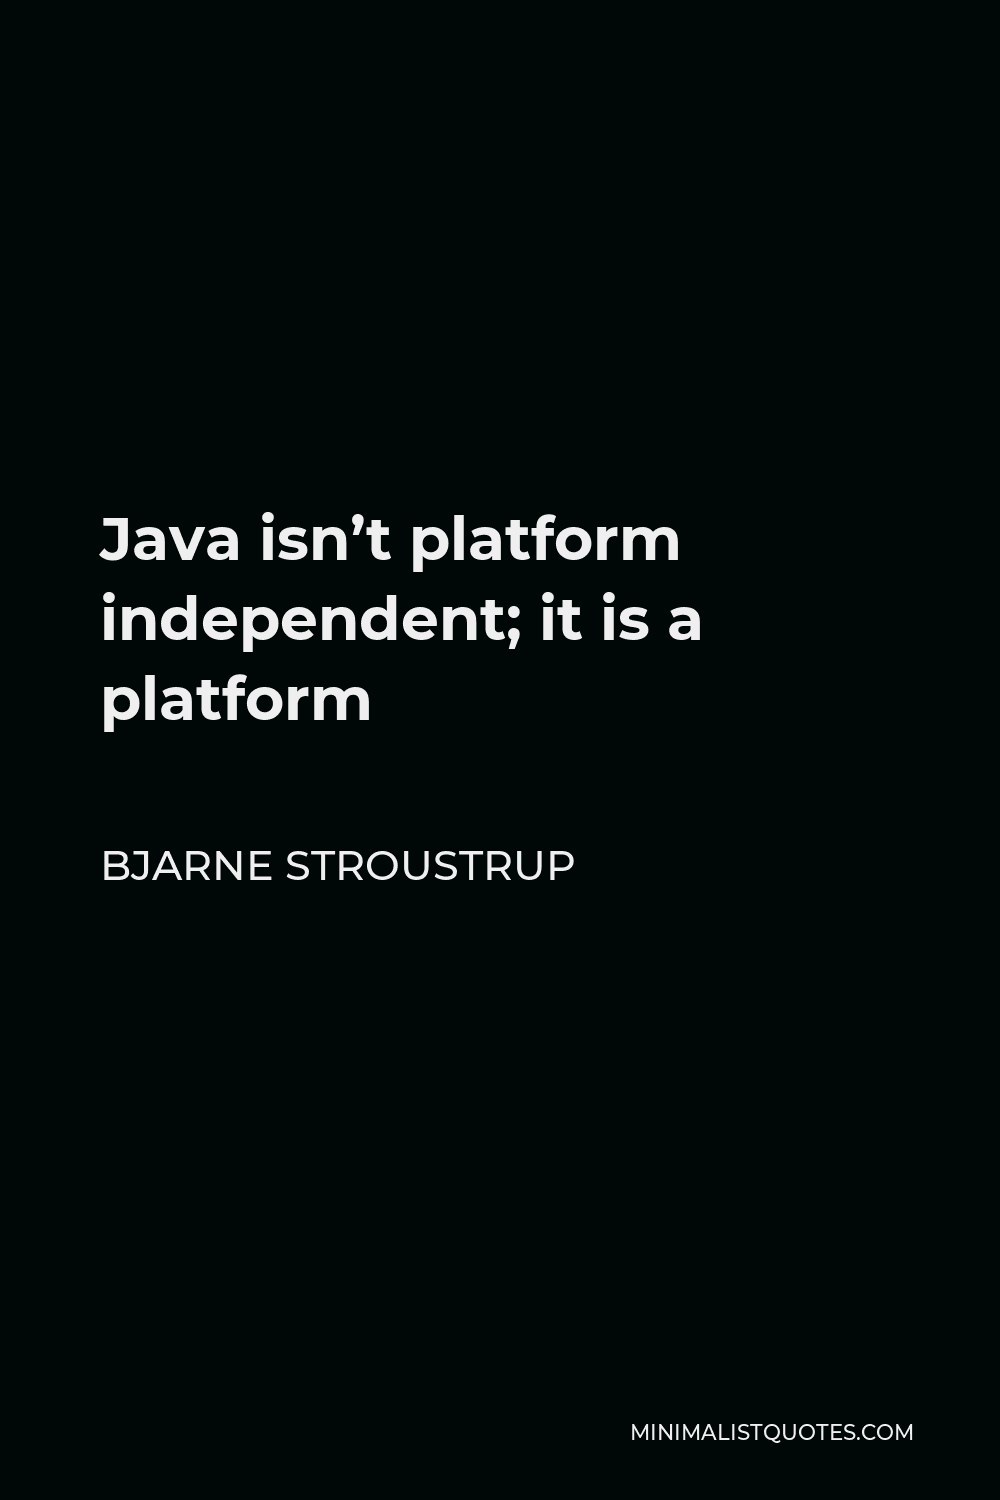 Bjarne Stroustrup Quote - Java isn’t platform independent; it is a platform